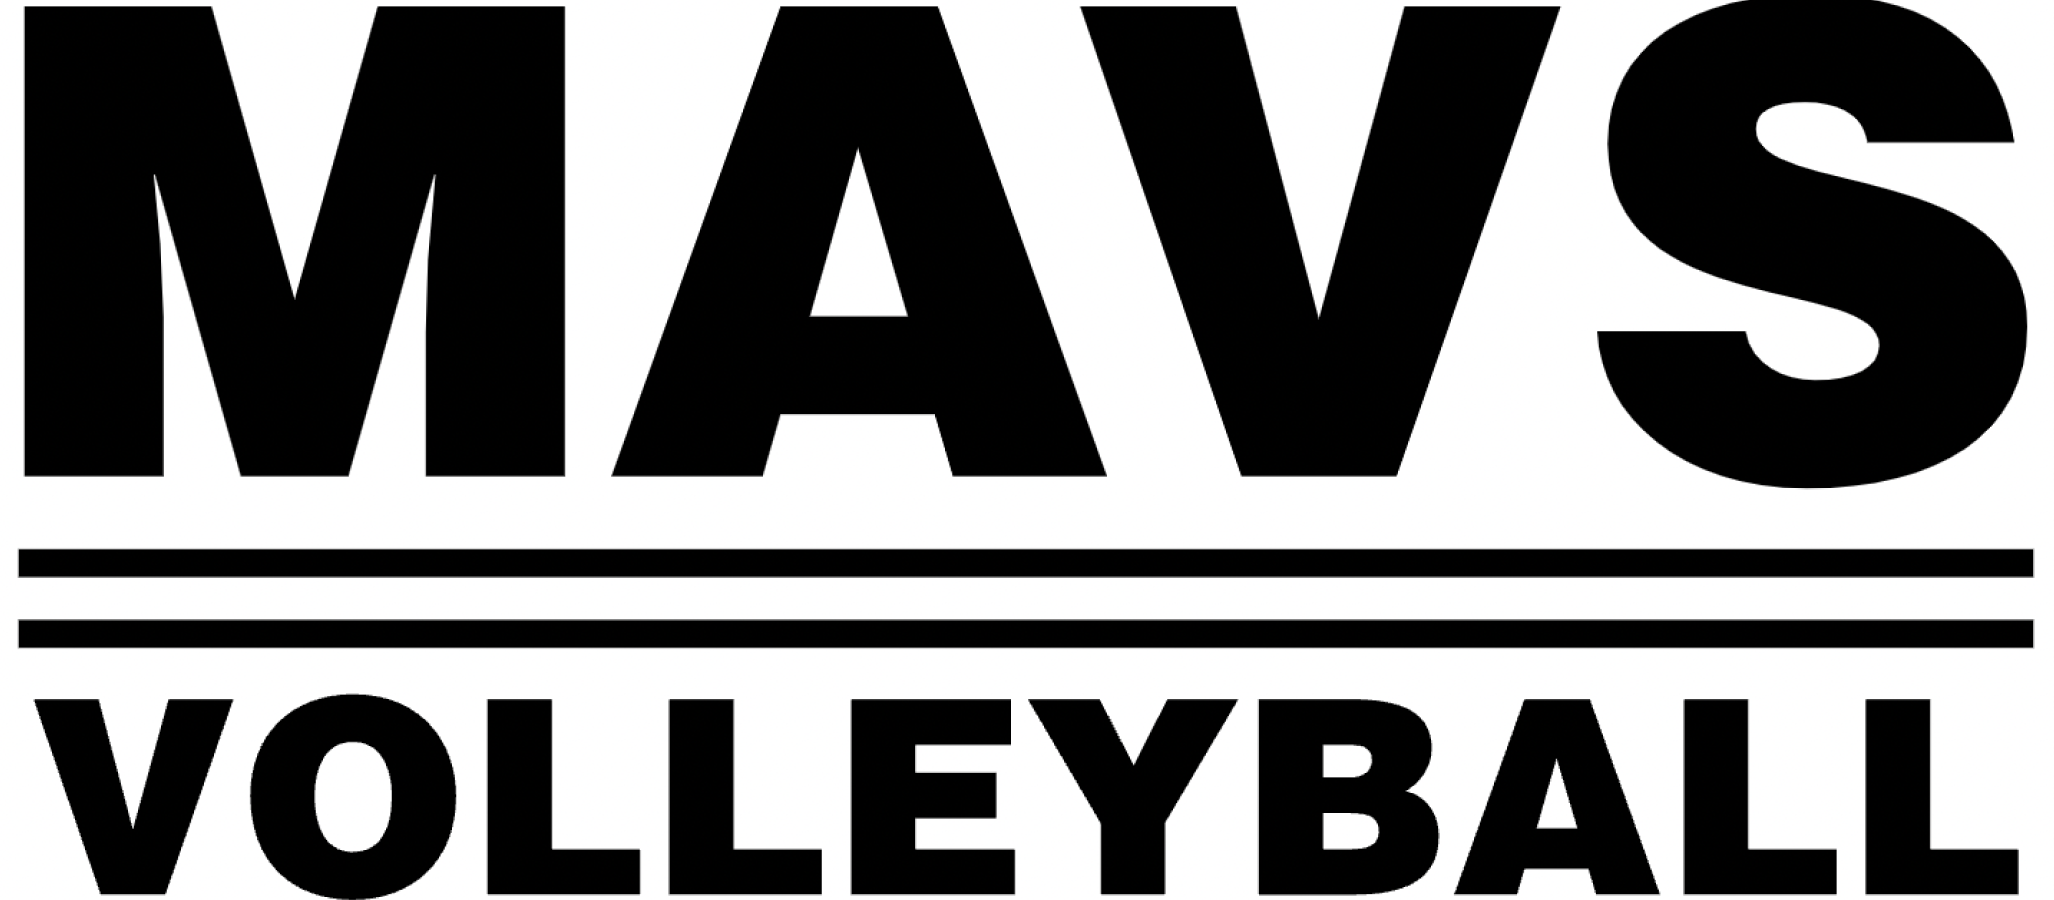 mavsvb-logo-hero